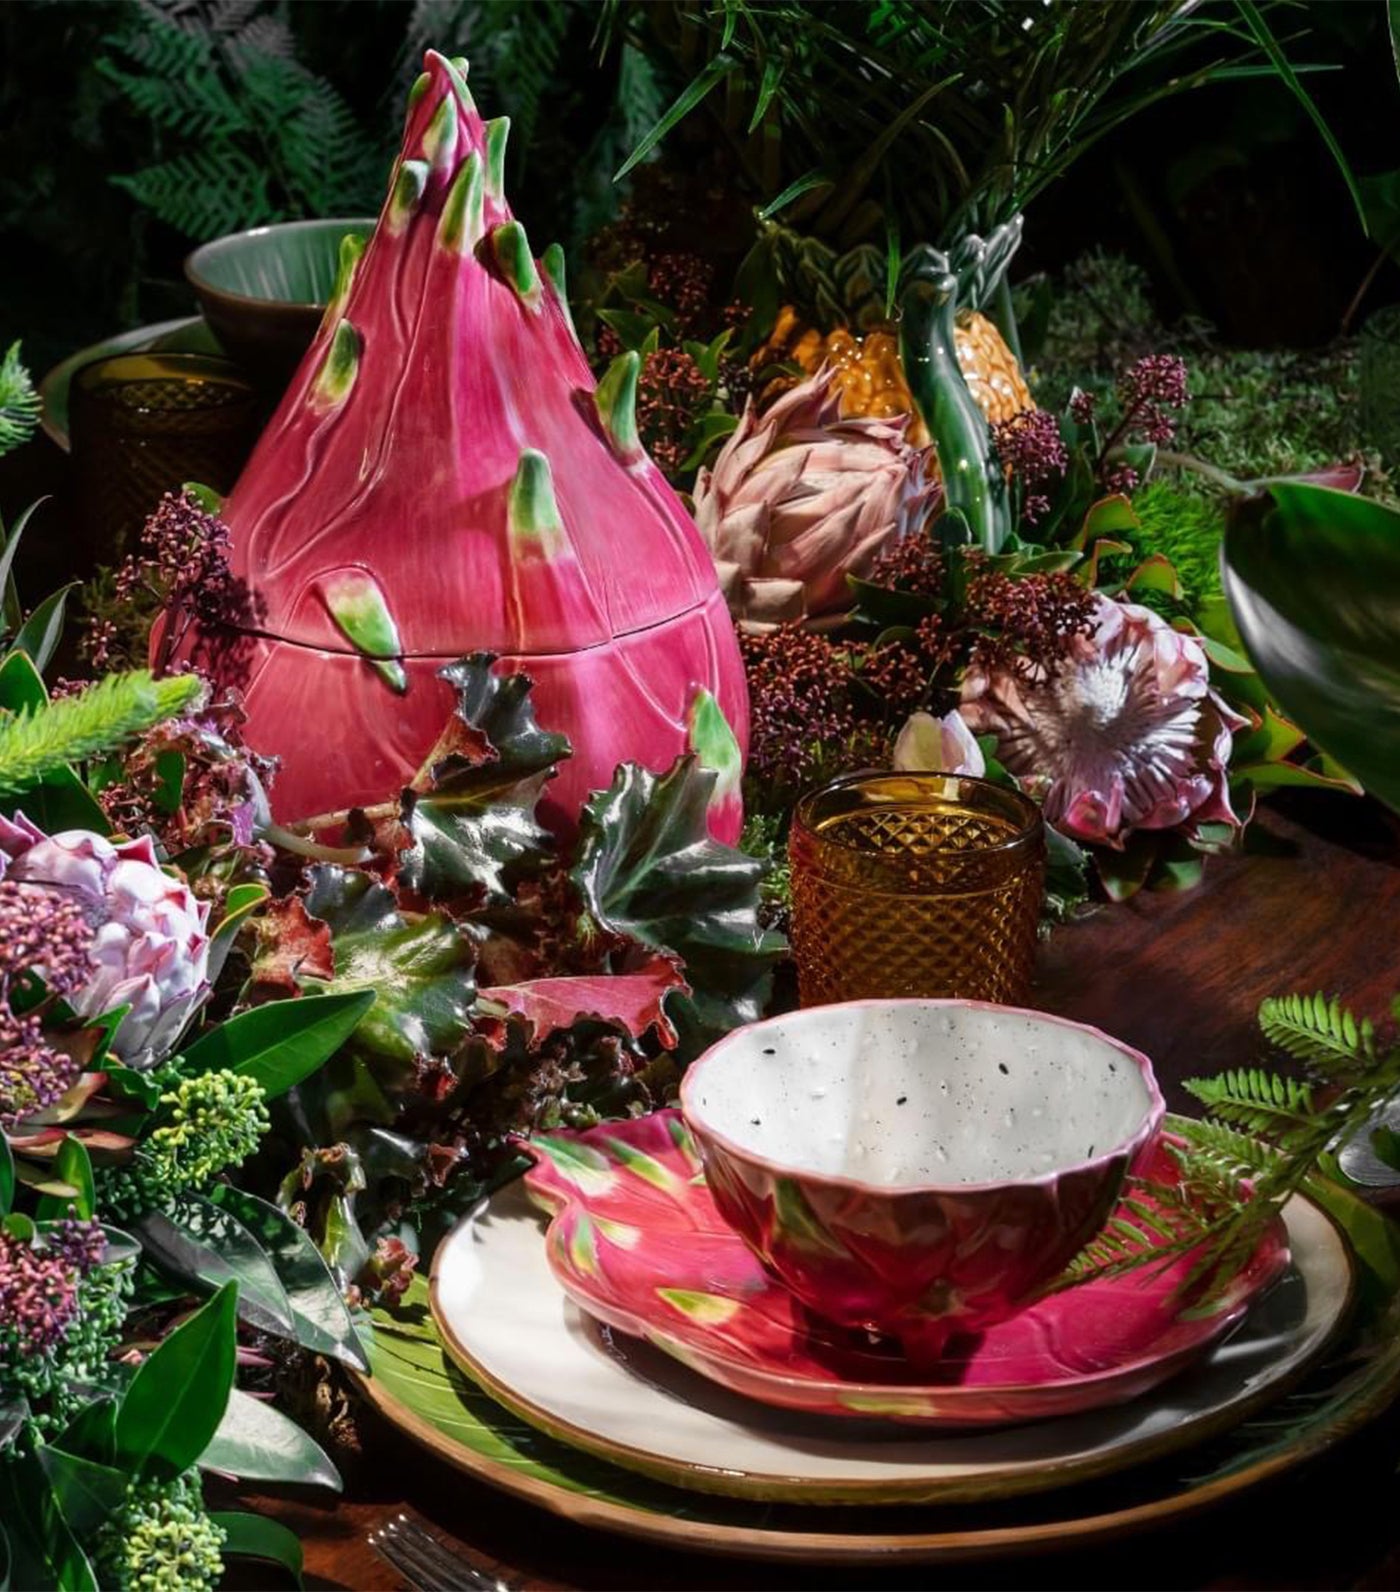 Tropical Fruit Tableware Collection - Pitaya